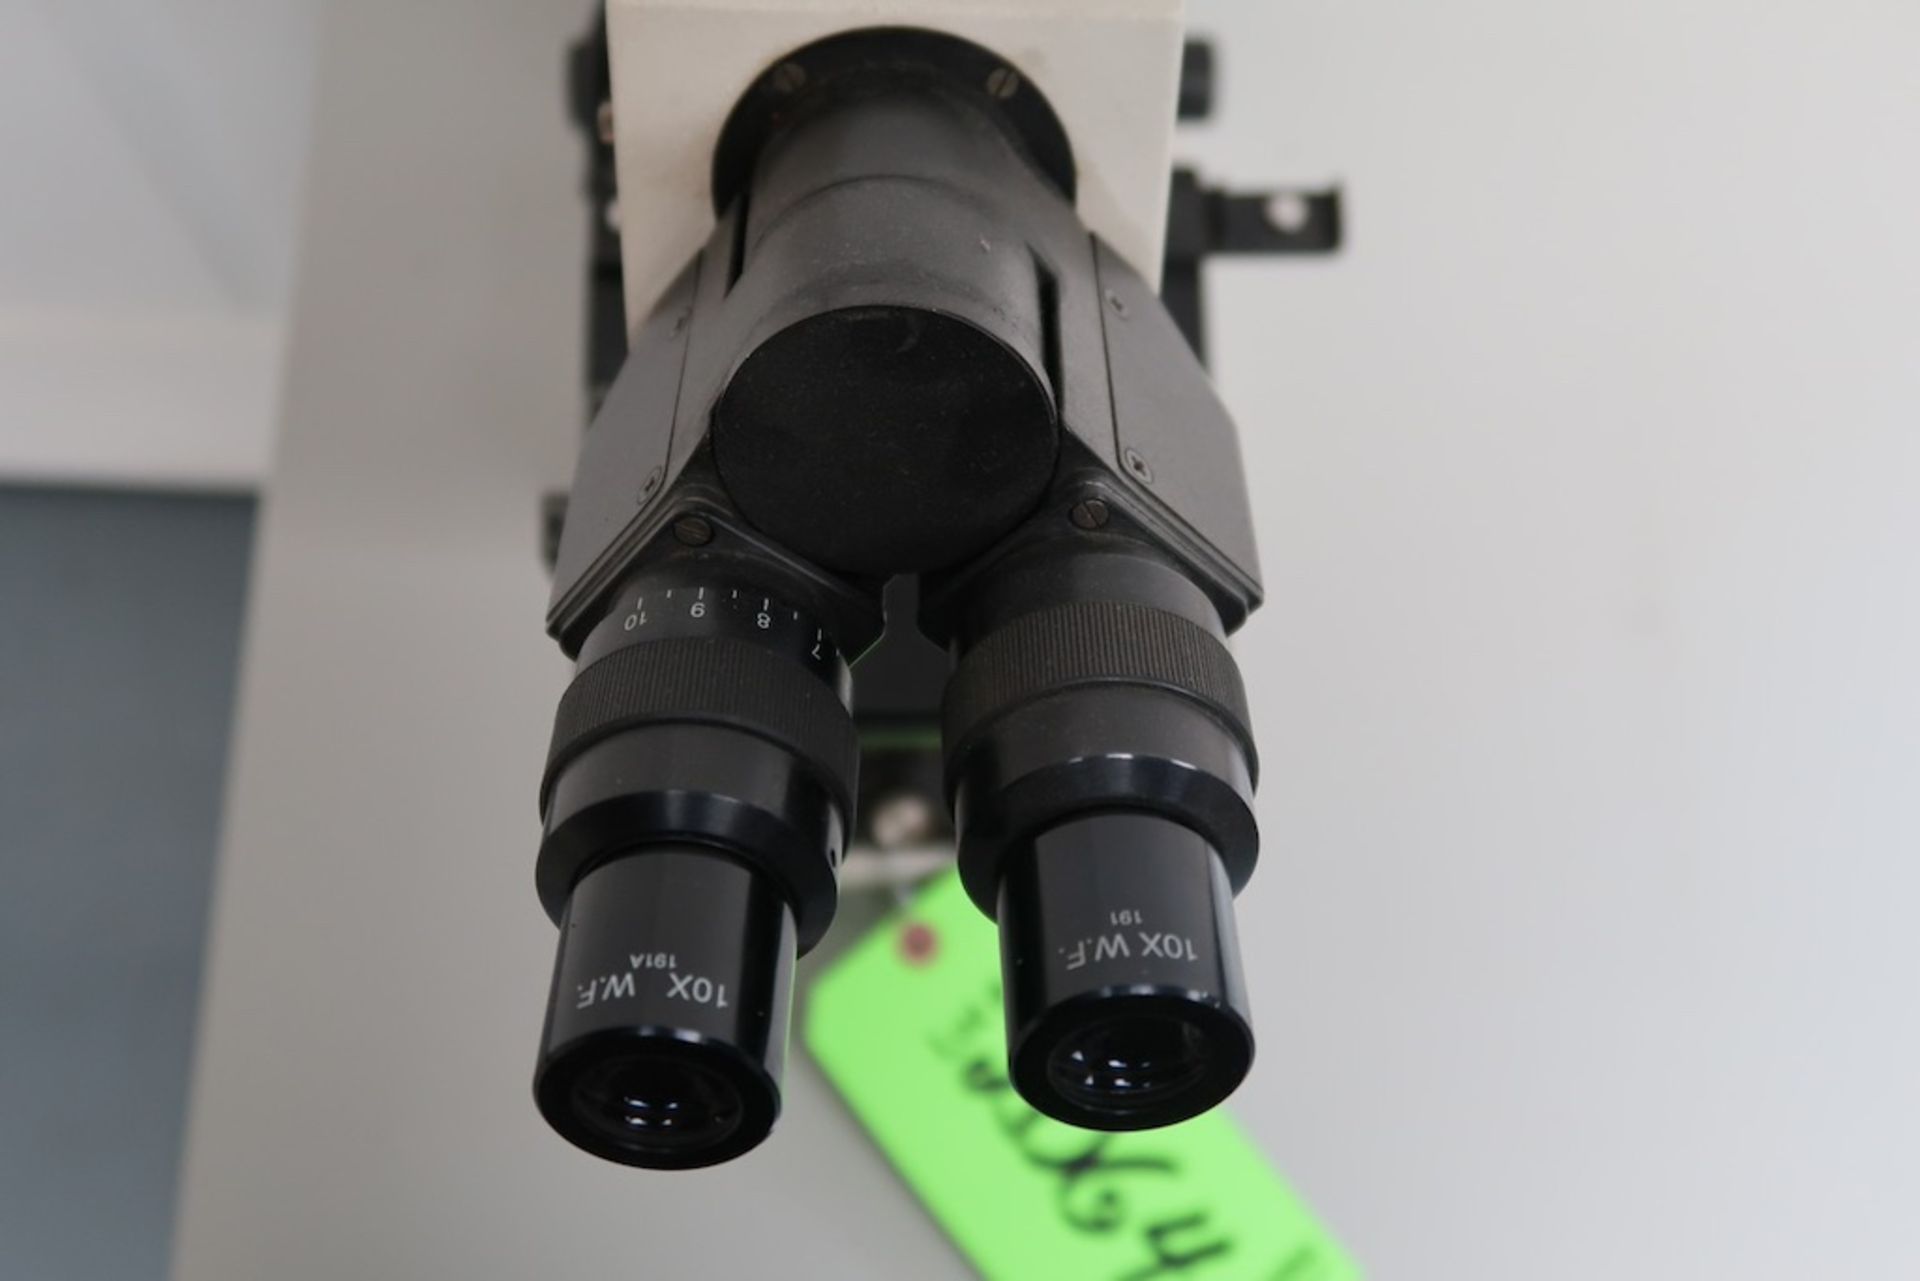 Leica ATC 2000 Benchtop Microscope - Image 2 of 3